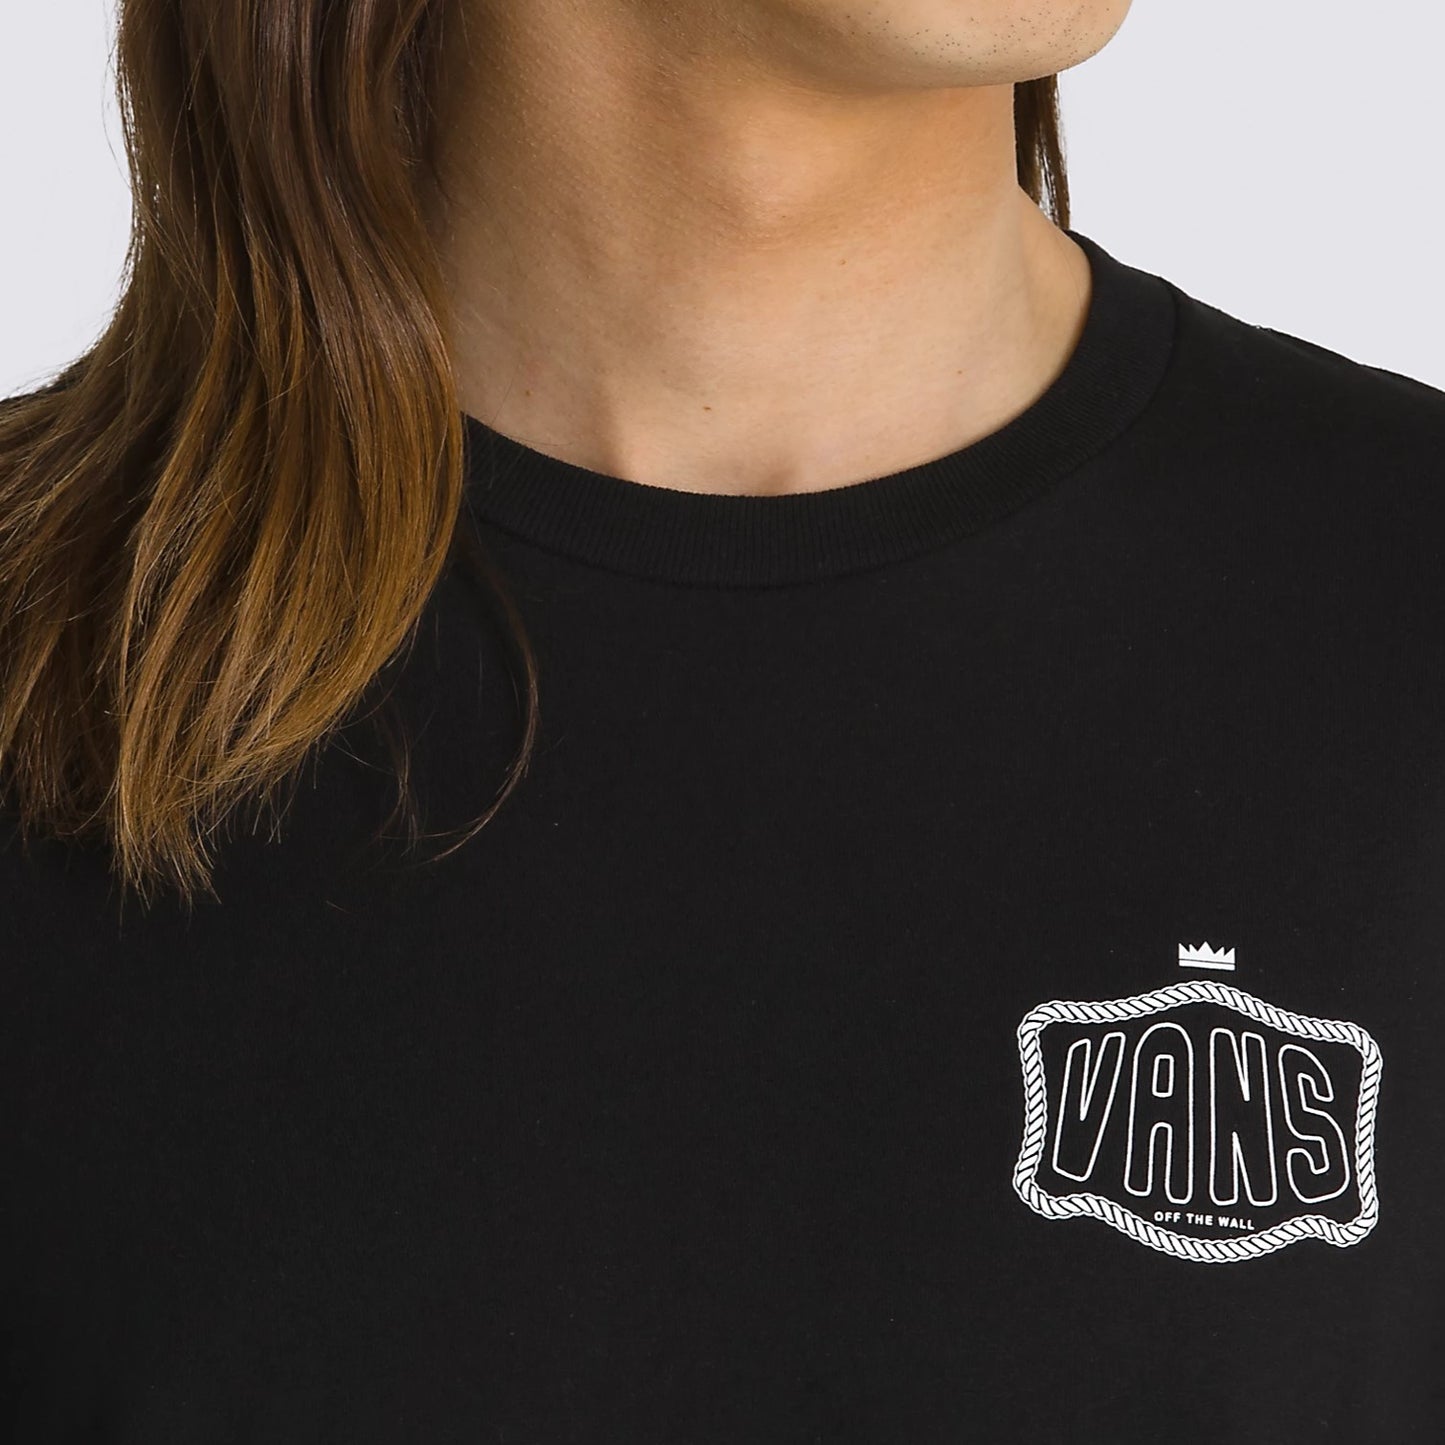 VANS Pawn Shop T-Shirt - Black